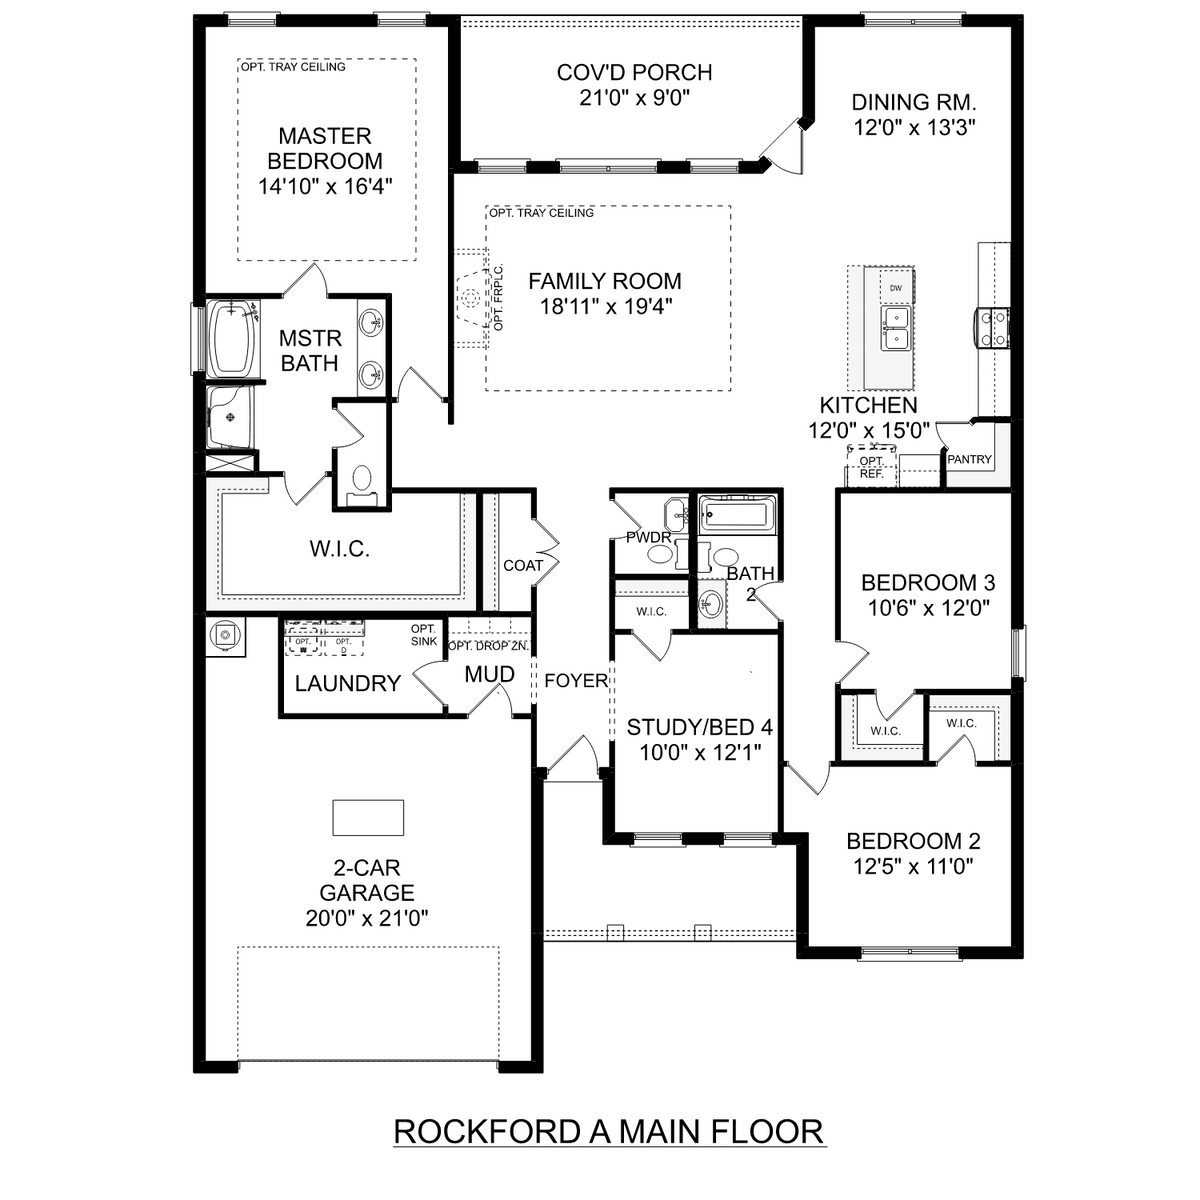 1 - The Rockford floor plan layout for 610 Magnolia Cove Lane SW in Davidson Homes' Magnolia Preserve community.